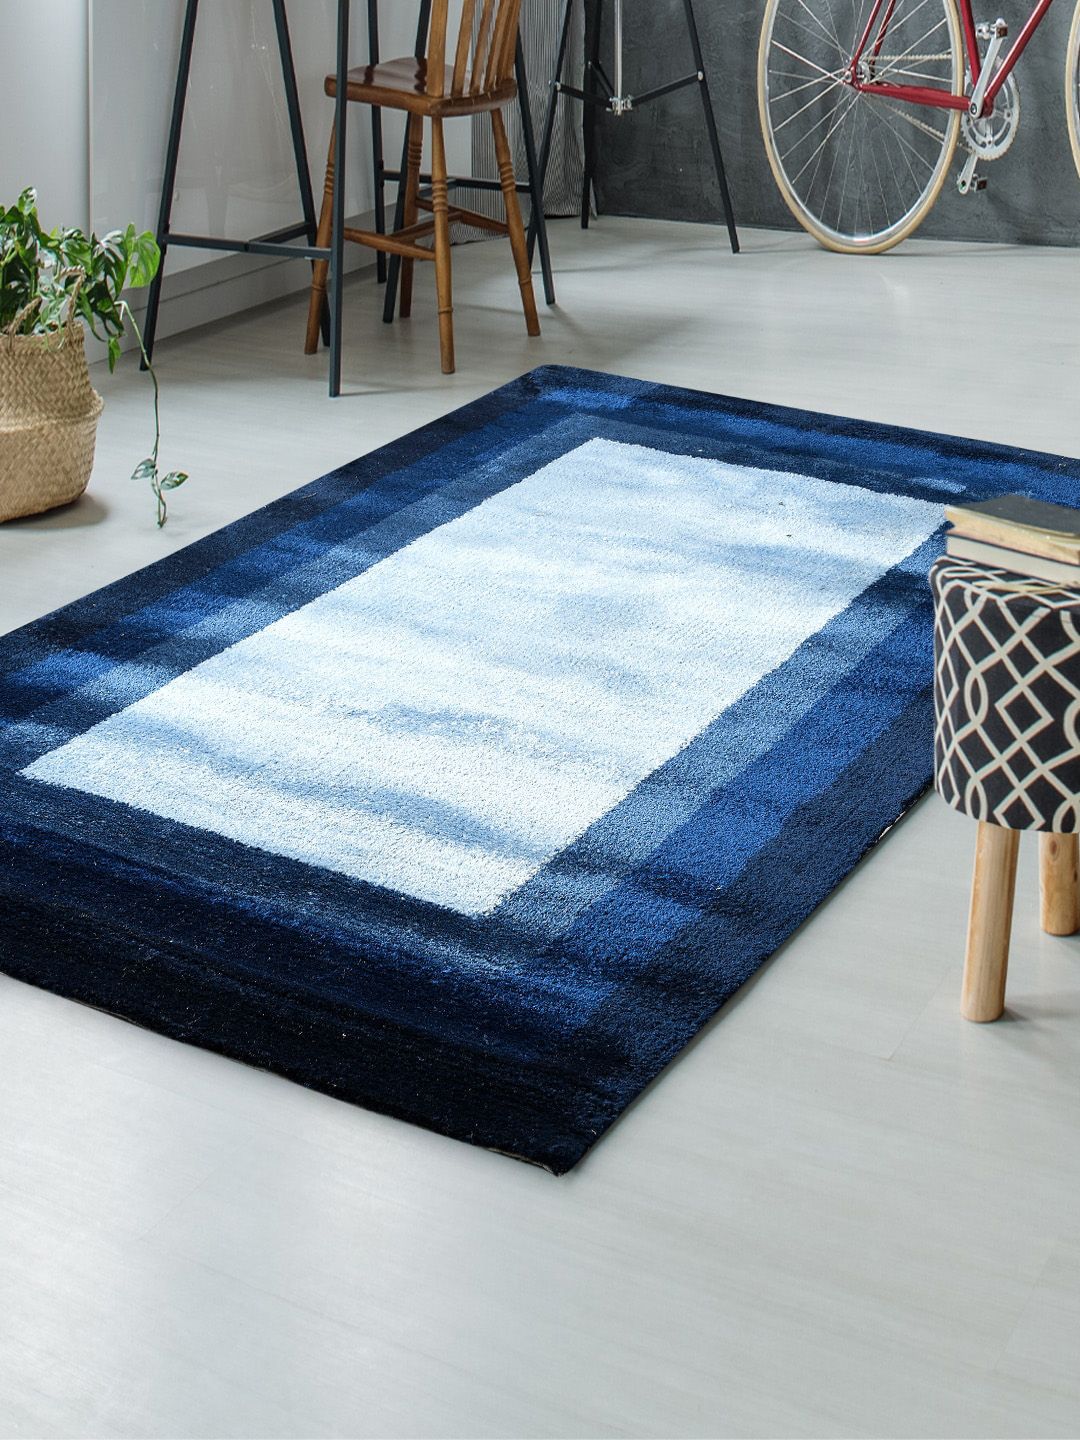 Saral Home Blue Printed Cotton Rectangular Carpet Price in India